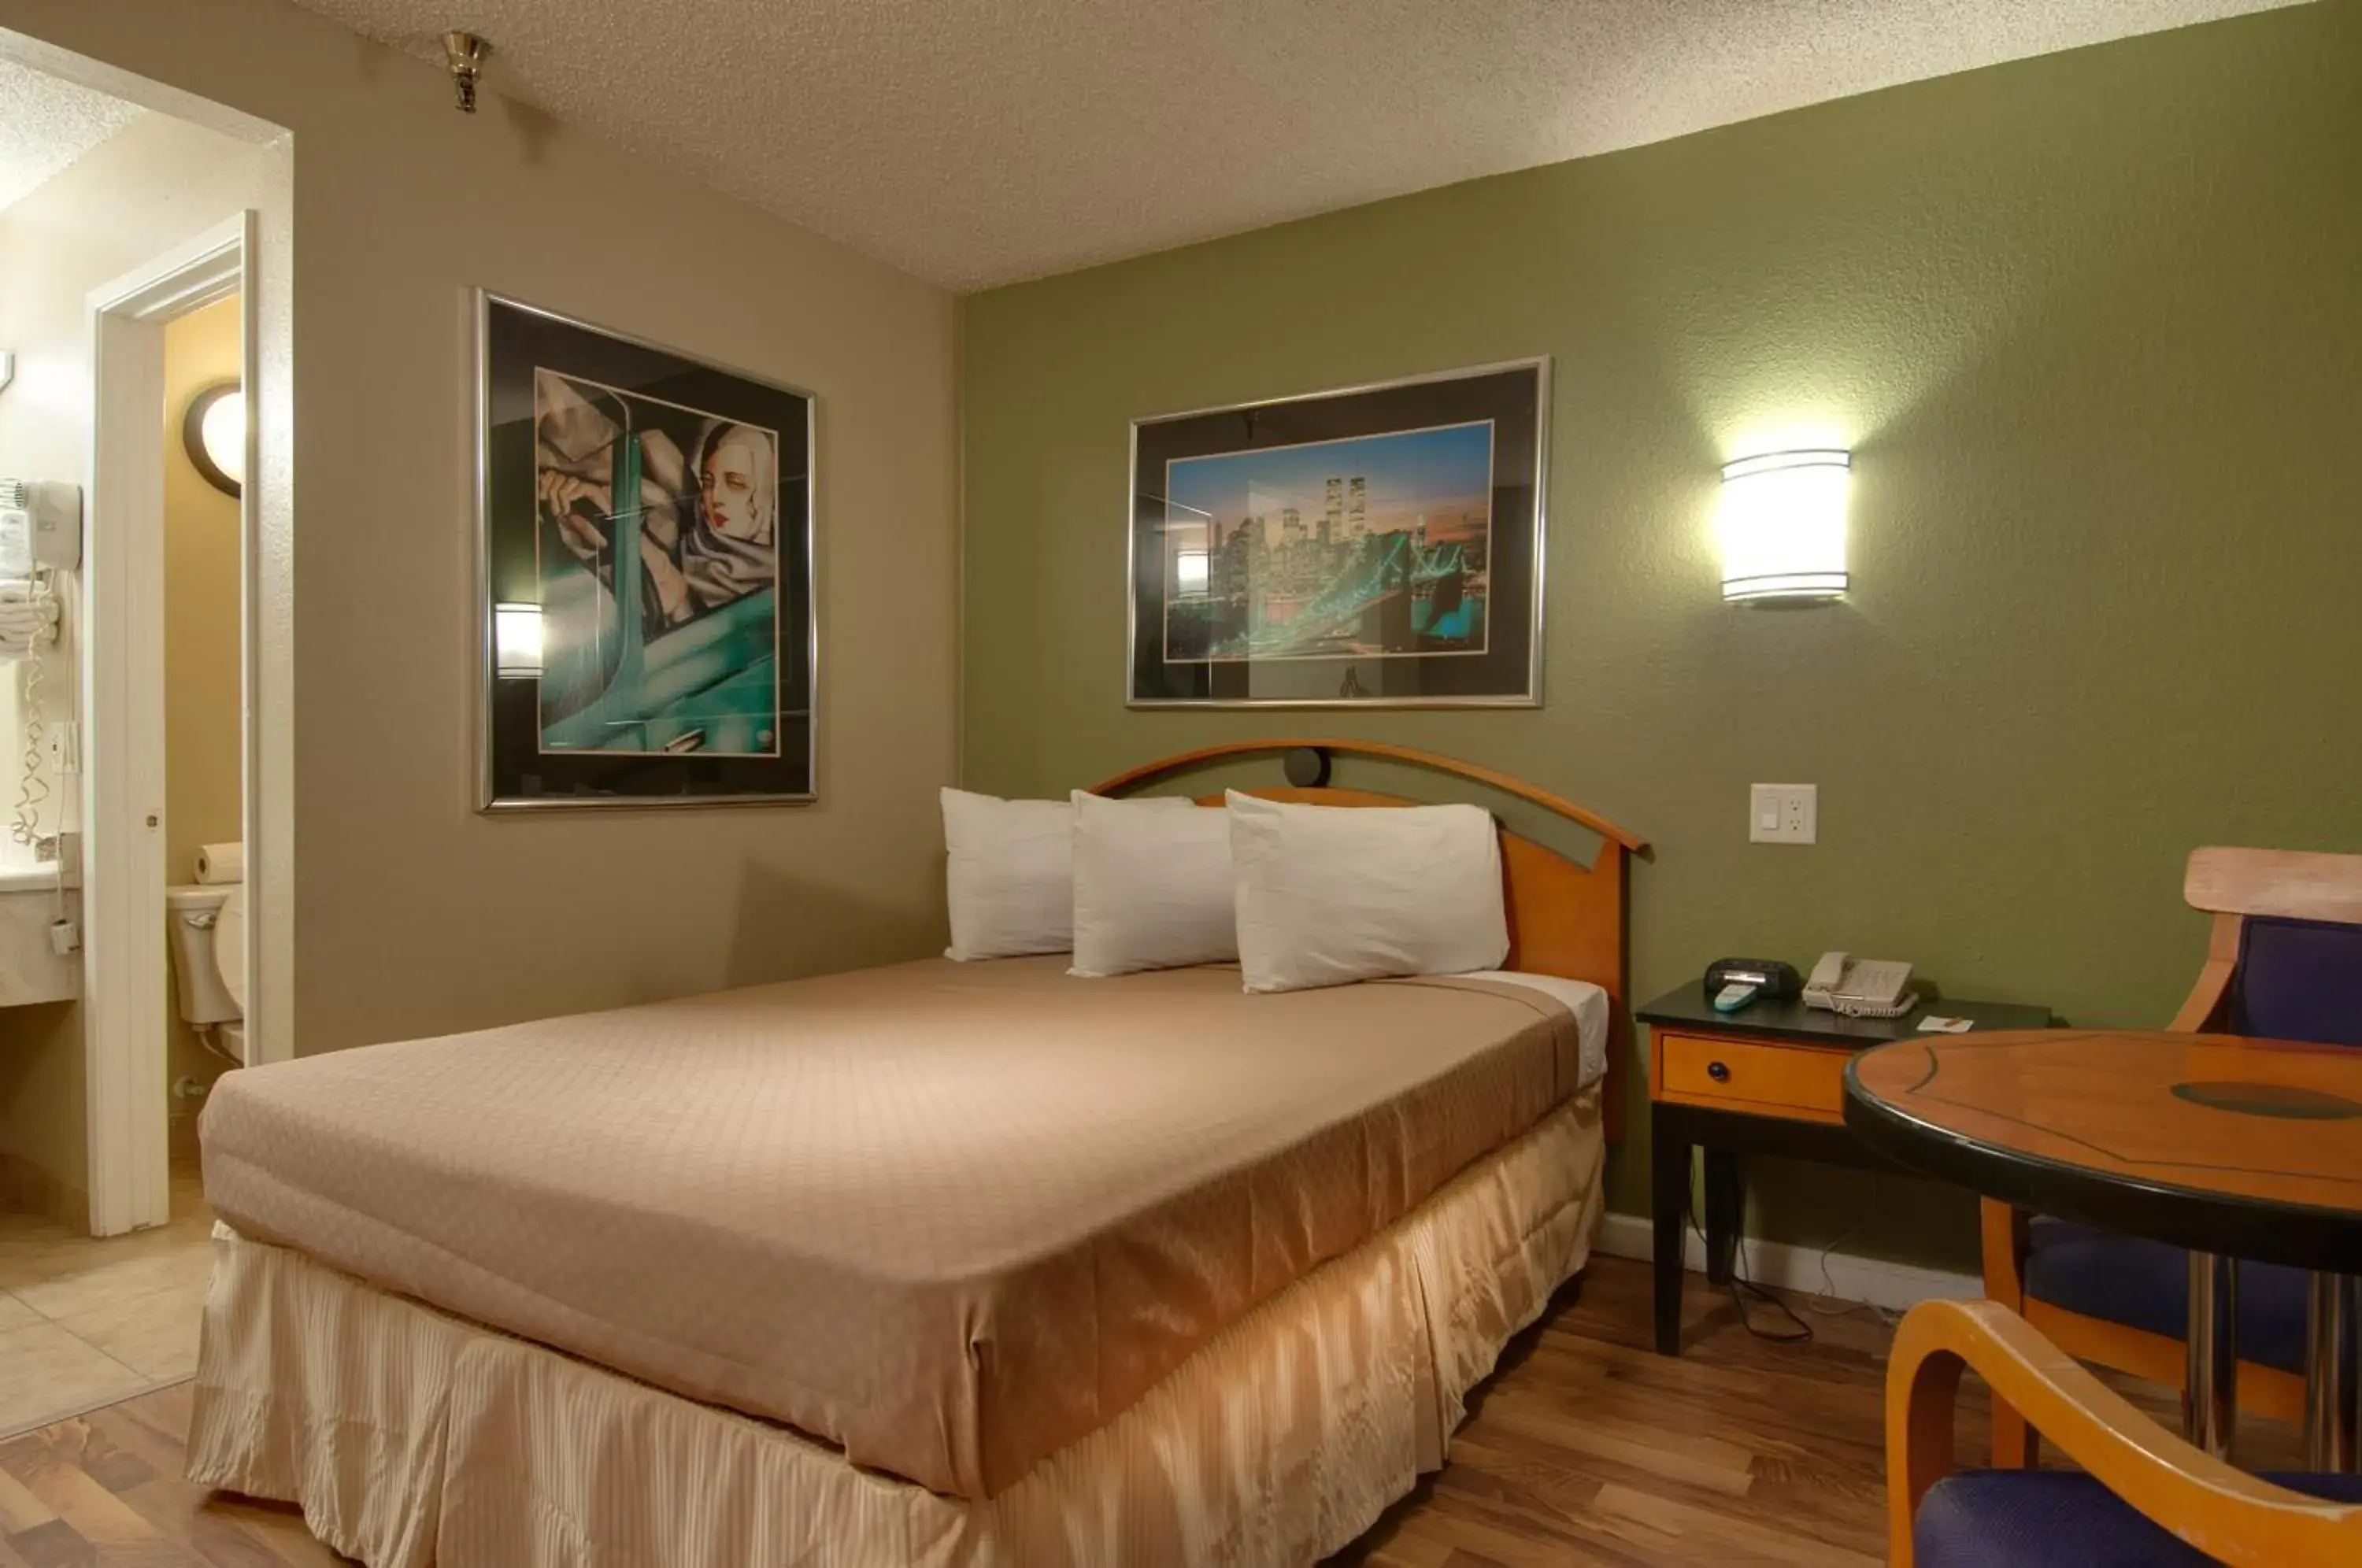 Bed, Room Photo in Vagabond Inn Bakersfield South